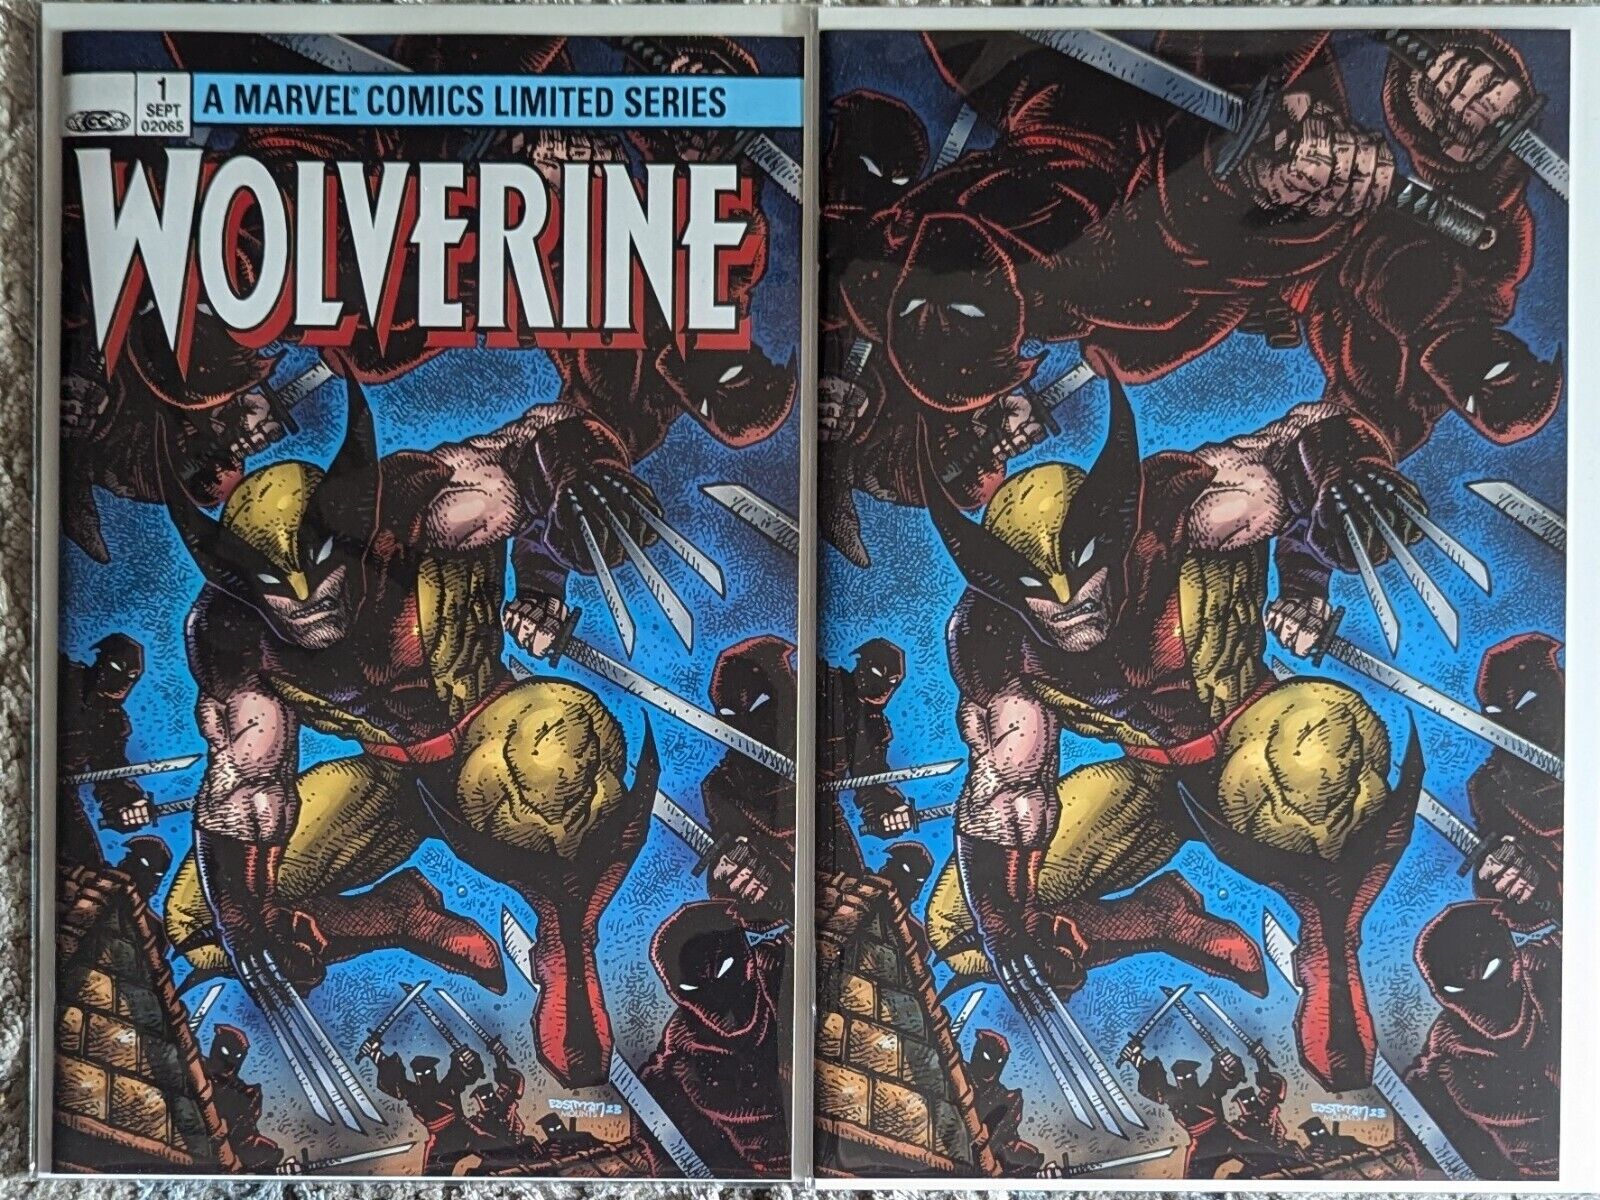 Wolverine #1 TRADE AND VIRGIN SET Kevin Eastman Megacon Exclusive